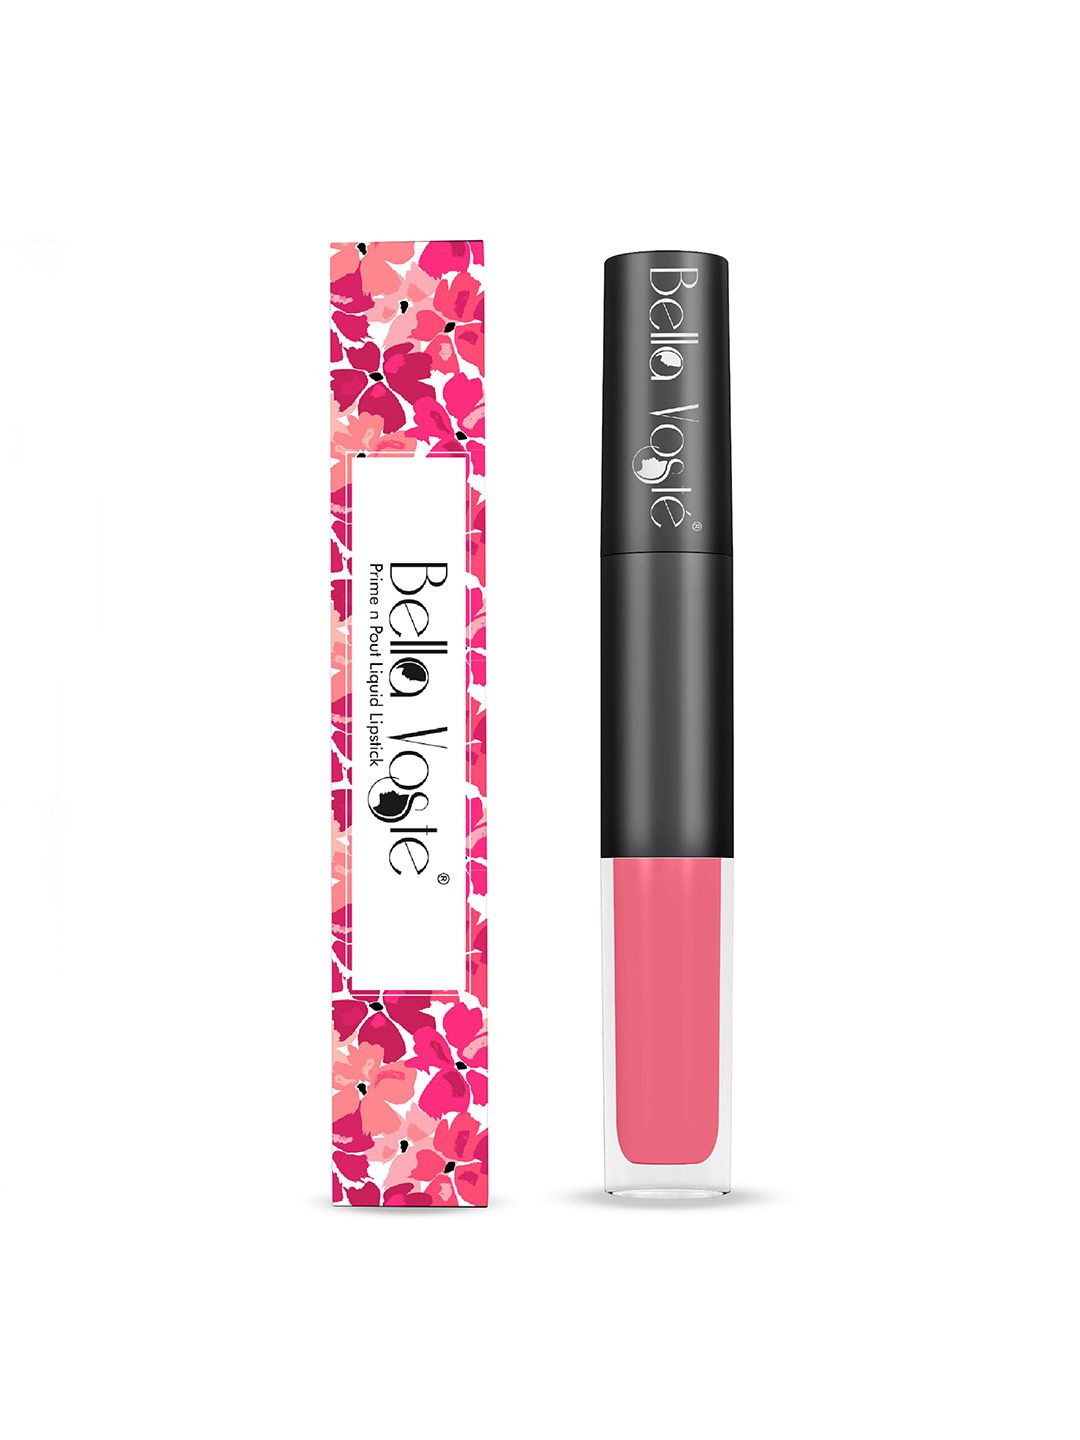 Bella Voste Pink Prime & Pout Liquid Lipstick & Lip Primer - Sensuous You Price in India